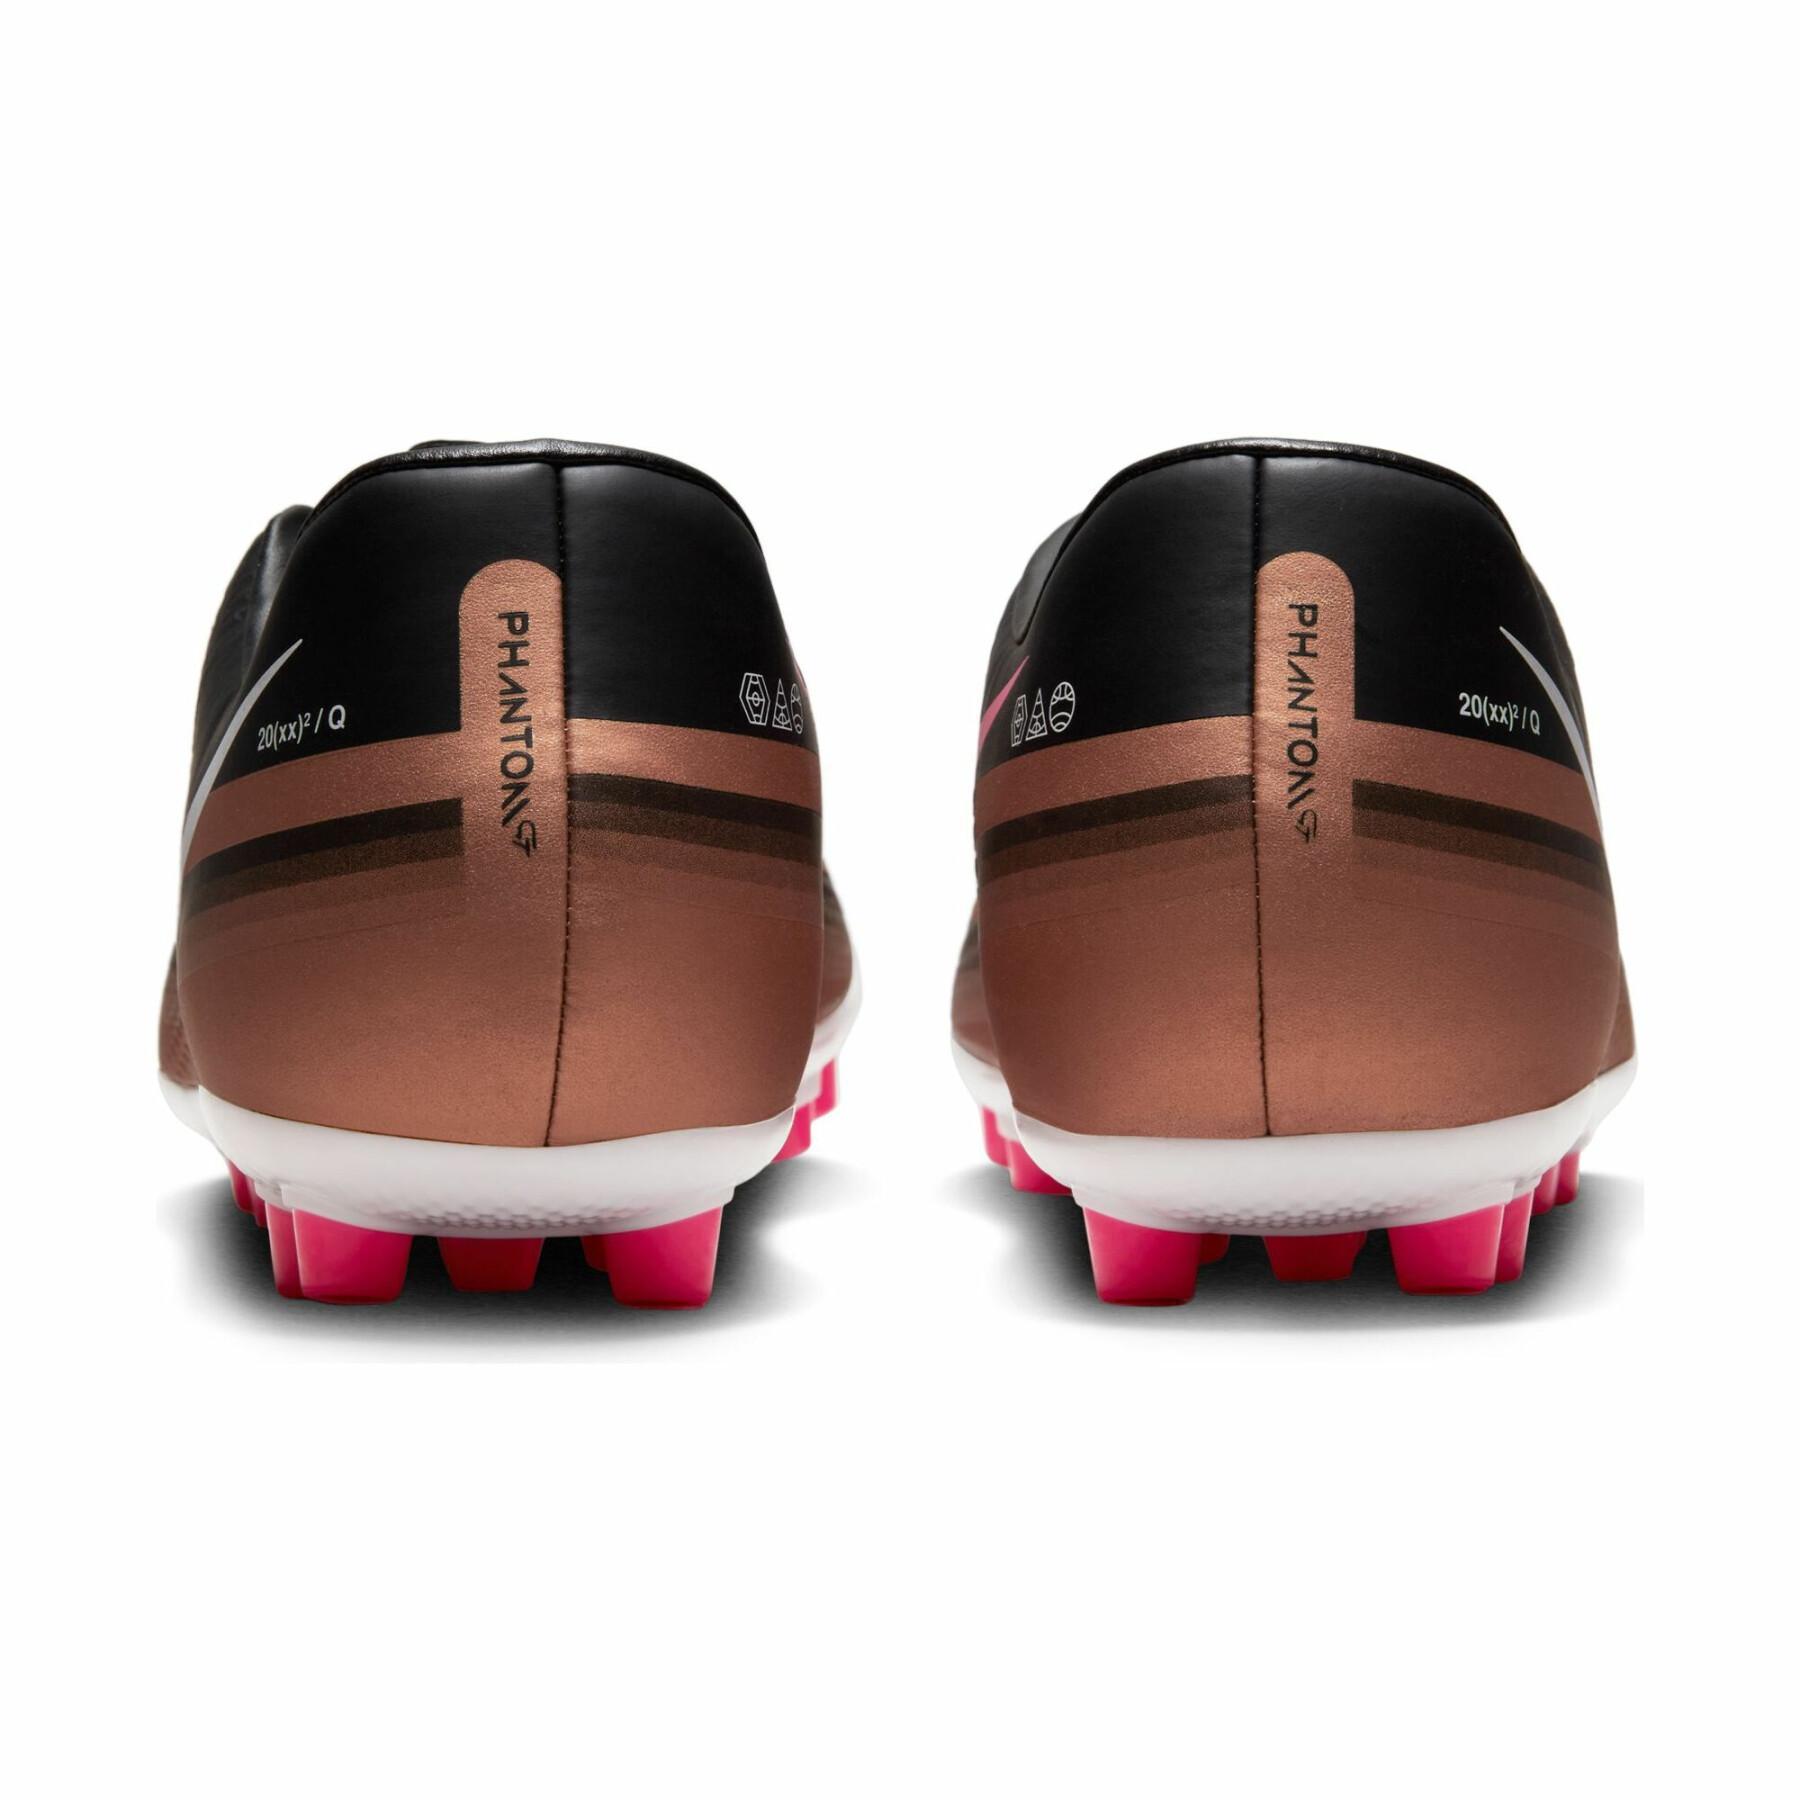 Soccer shoes Qatar Phantom GT2 Academy AG - Generation Pack